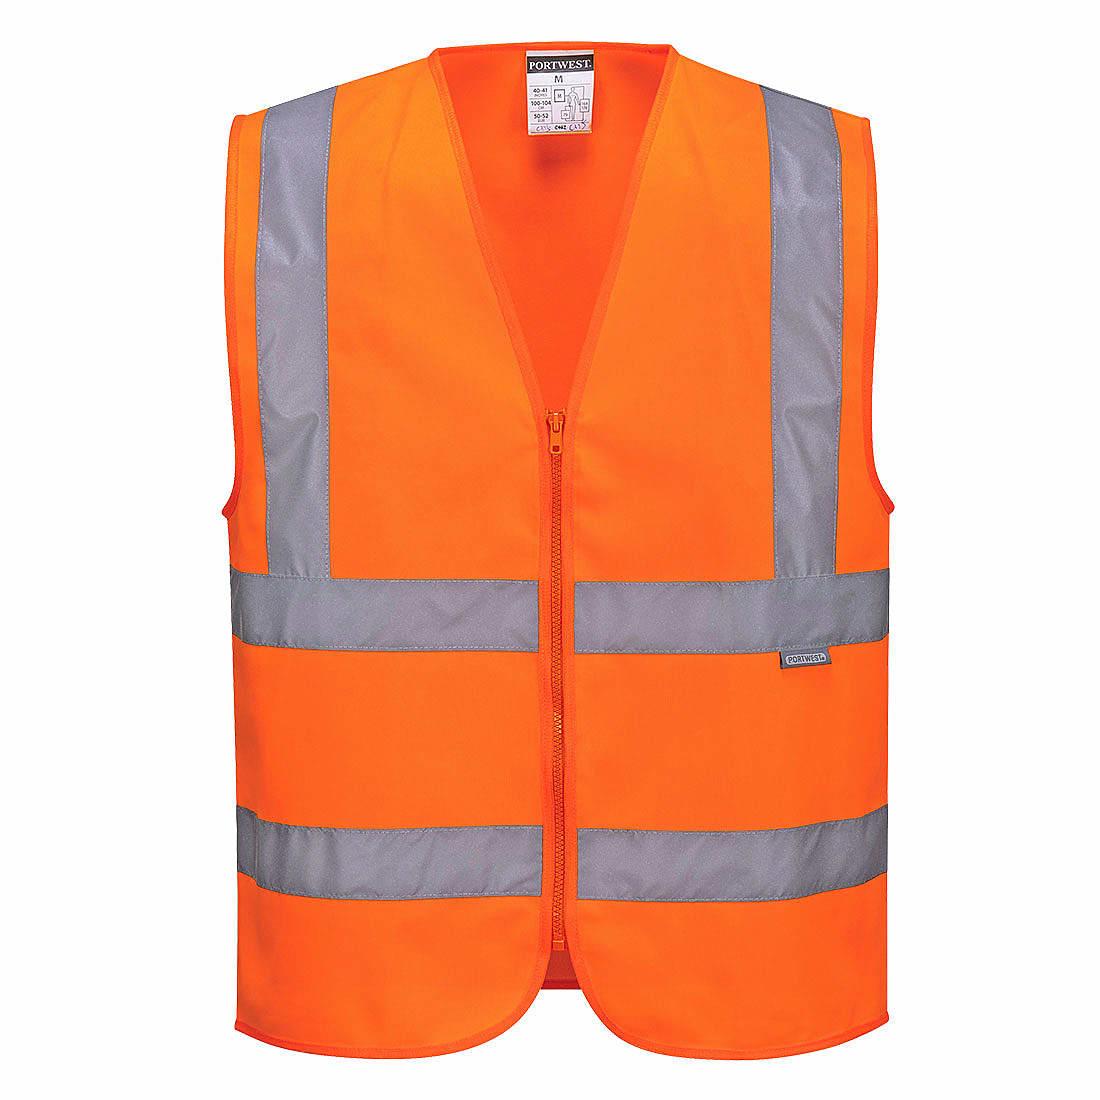 Portwest Hi-Viz Zipped Band & Brace Vest in Orange (Product Code: C375)